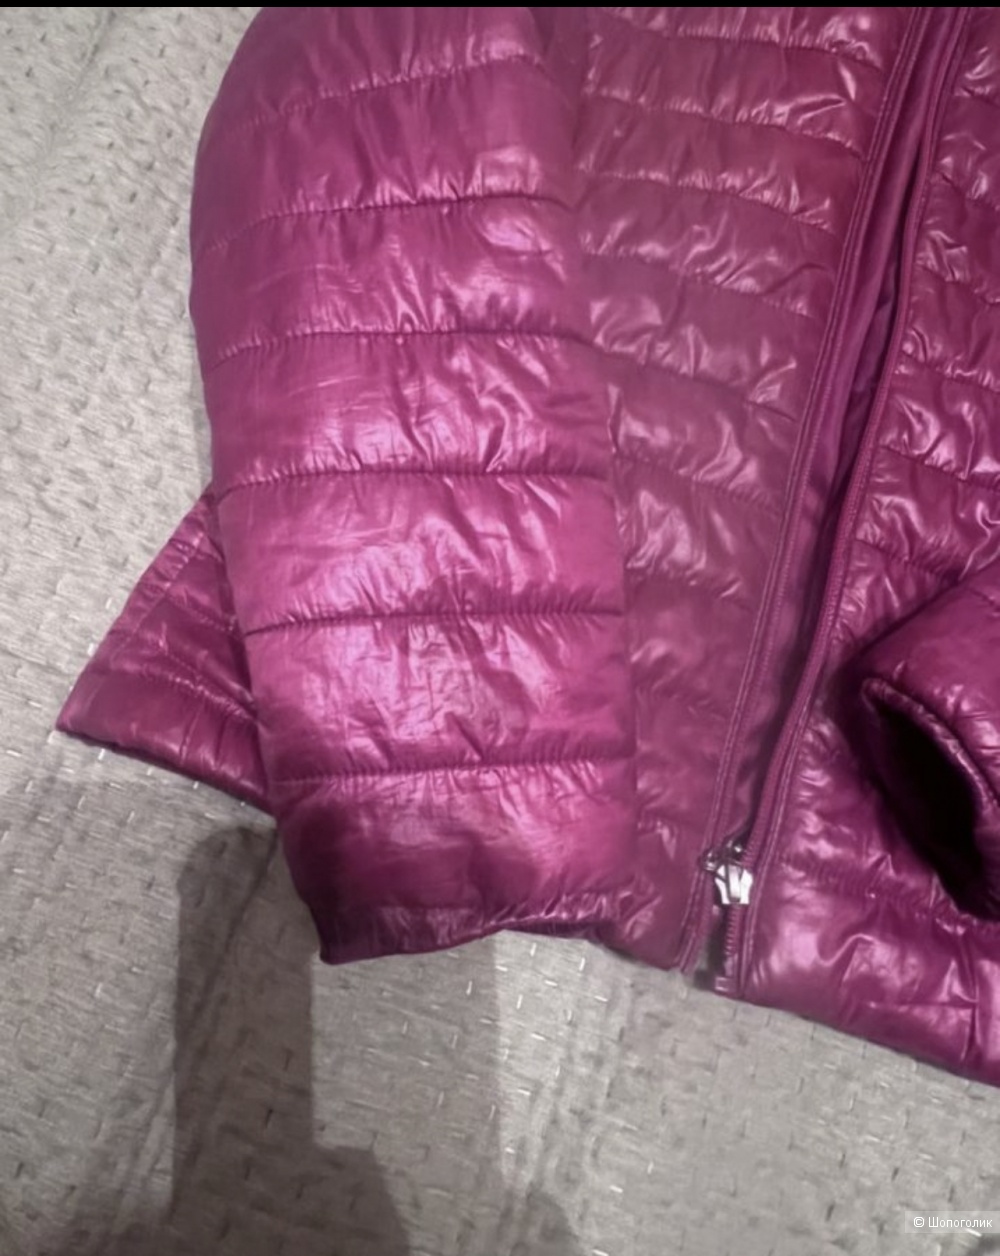 Куртка розовая Terranova, 10-11 лет